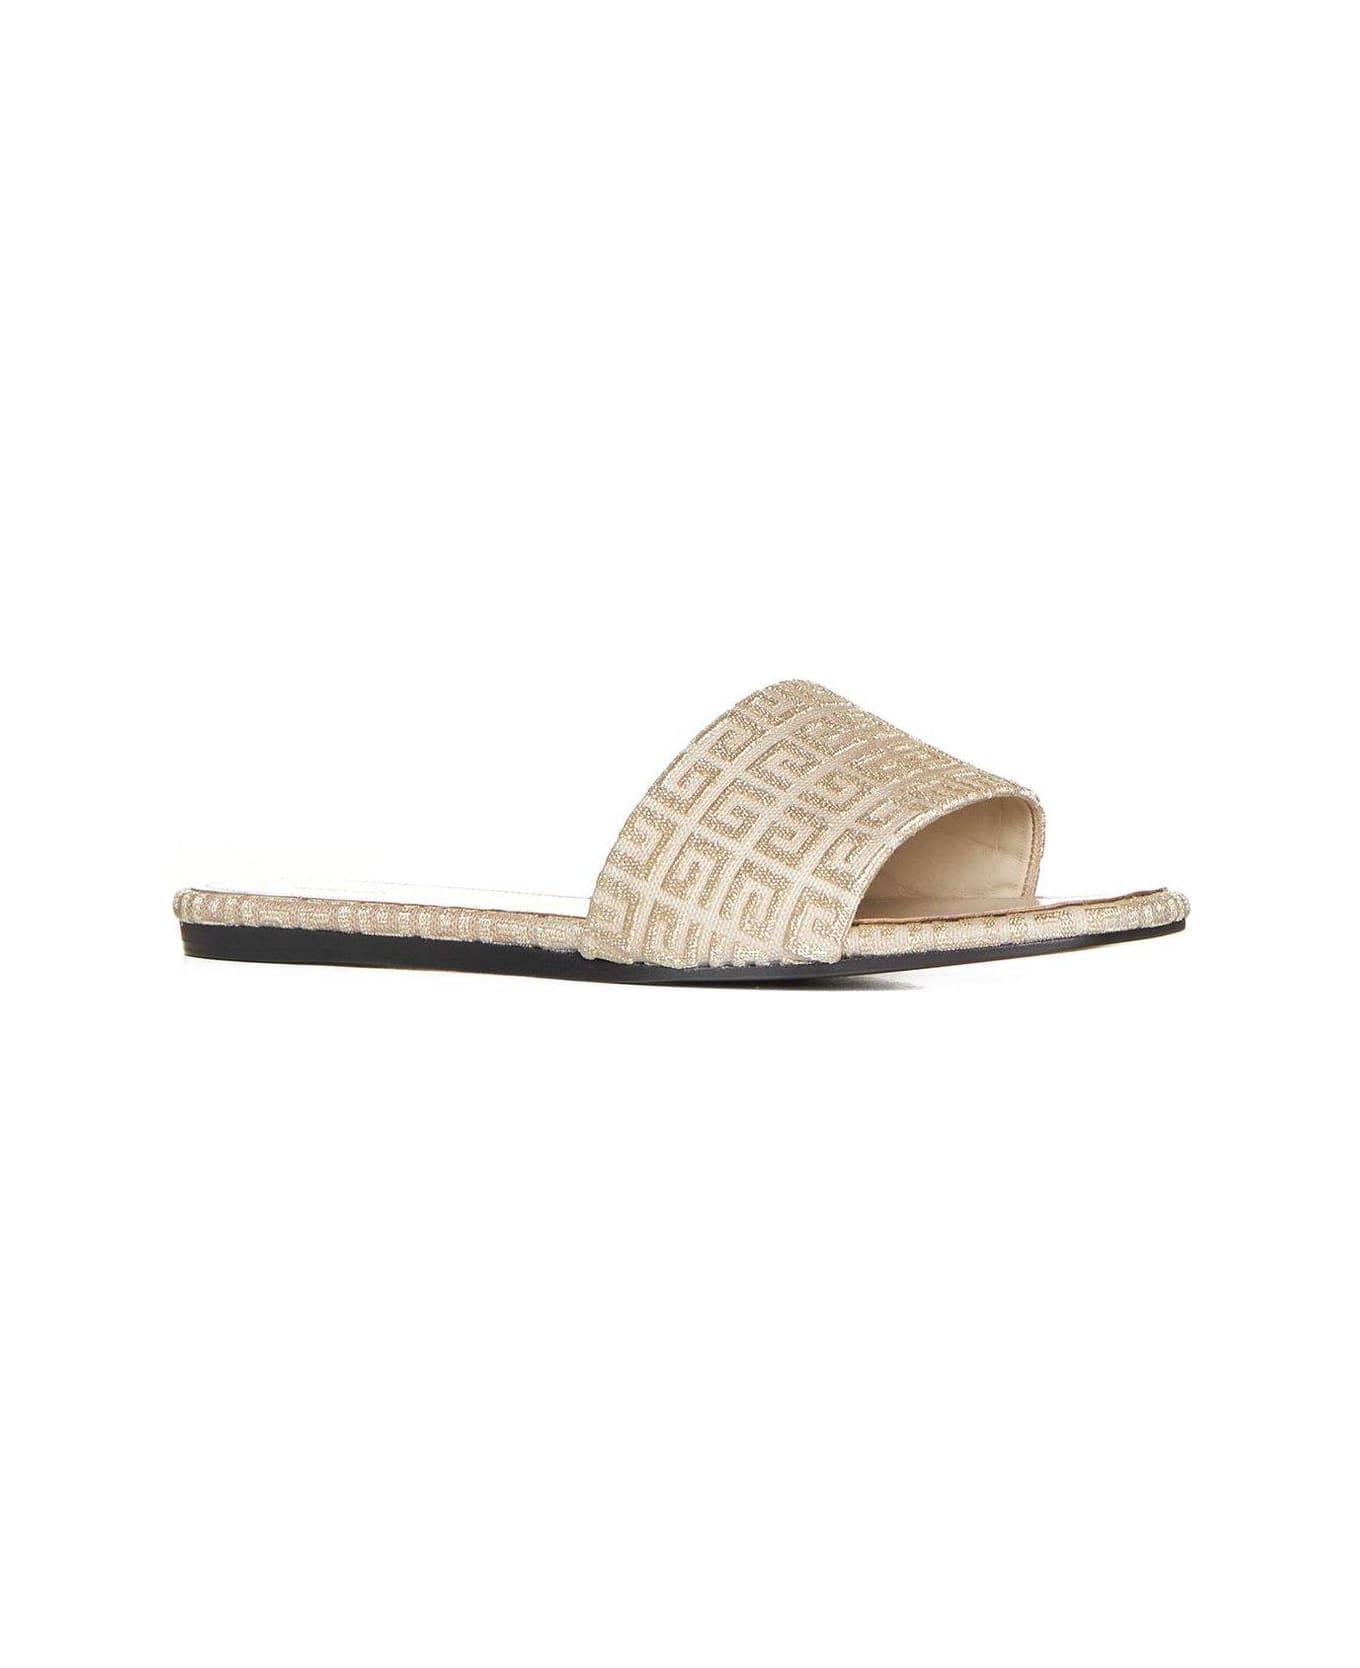 Givenchy Motif Open-toe Sandals - Golden サンダル